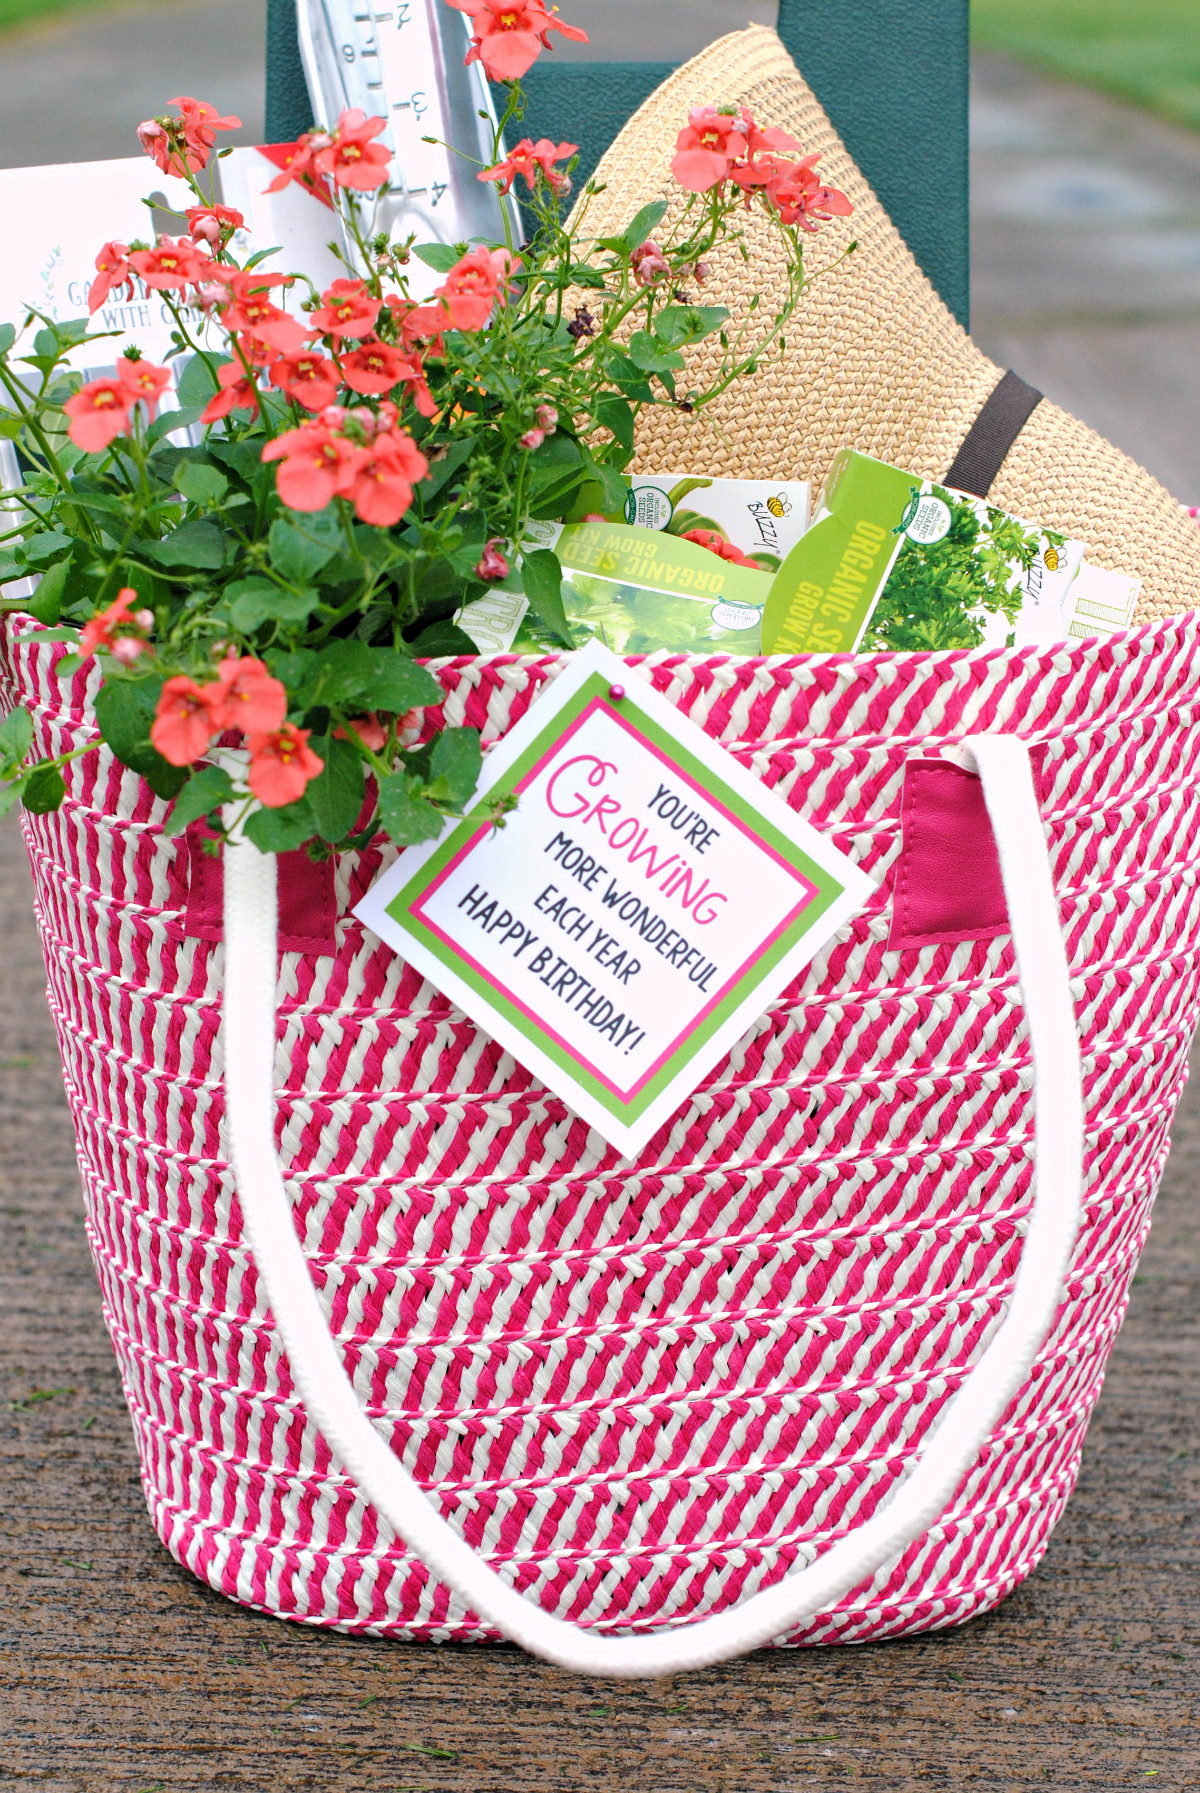 Garden Gift Baskets Ideas
 Fun Gardening Gift Basket Idea – Fun Squared